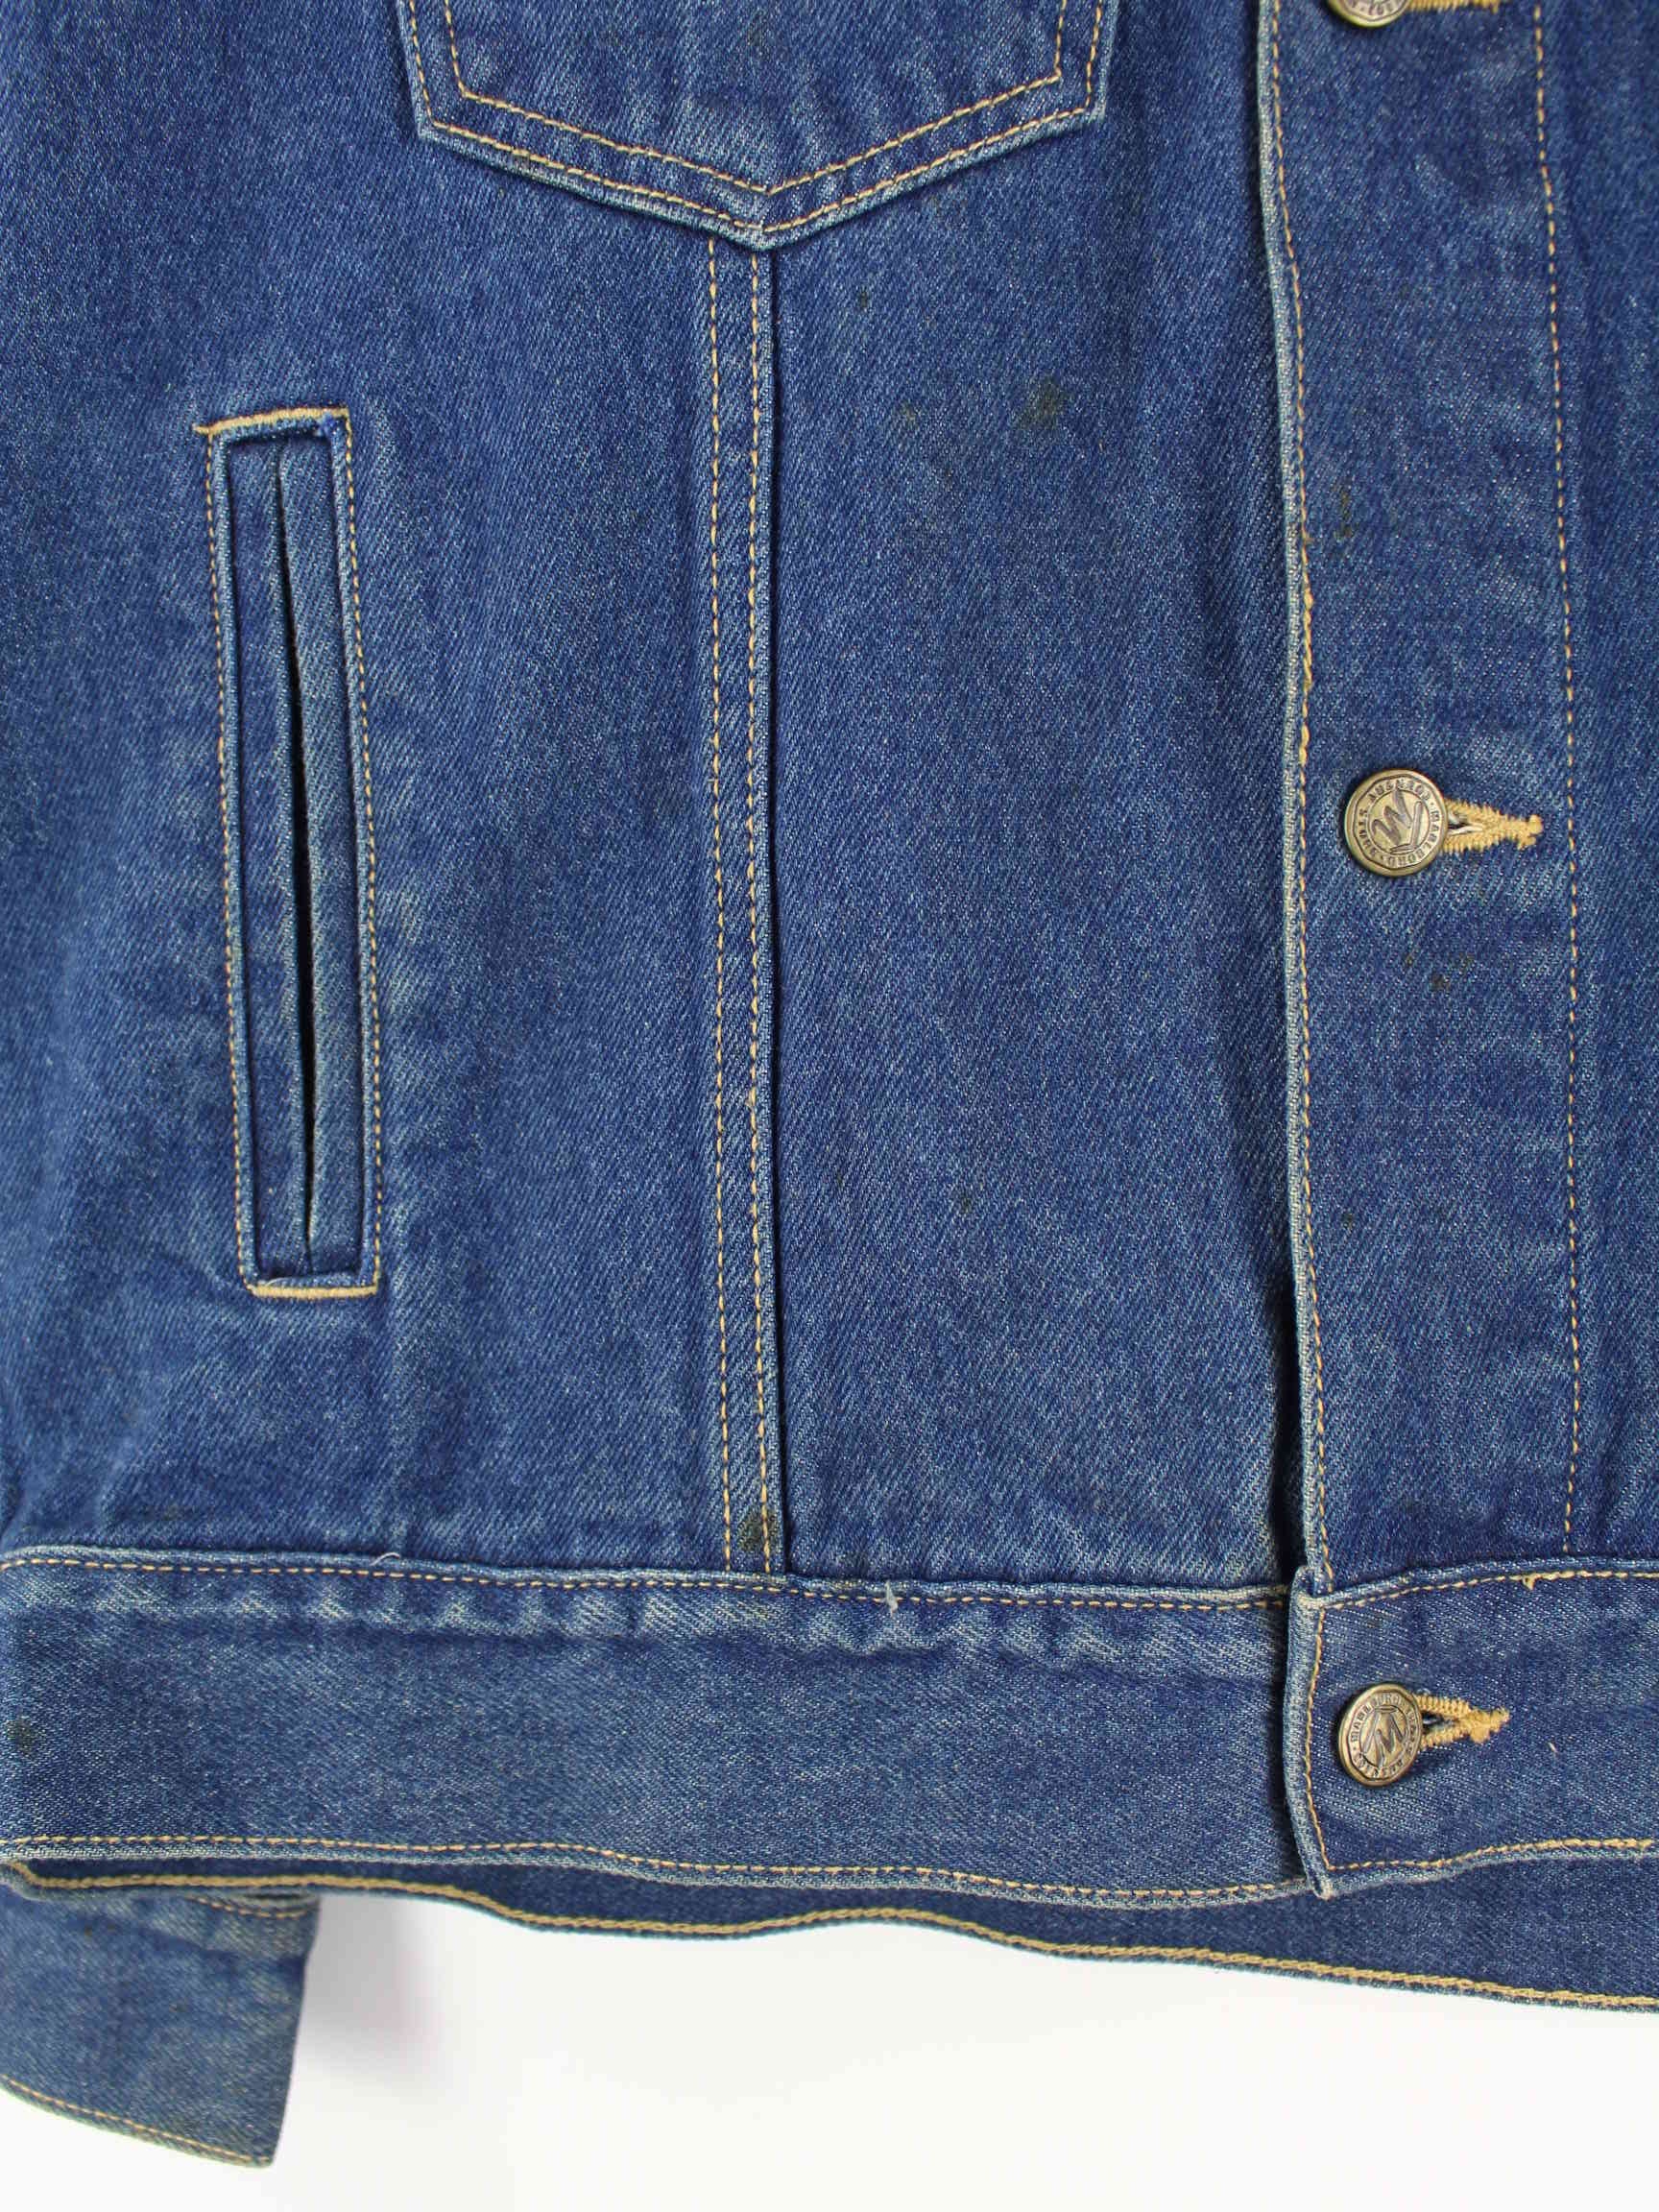 Marlboro 90s Vintage Country Store Trucker Jeans Jacke Blau M (detail image 6)